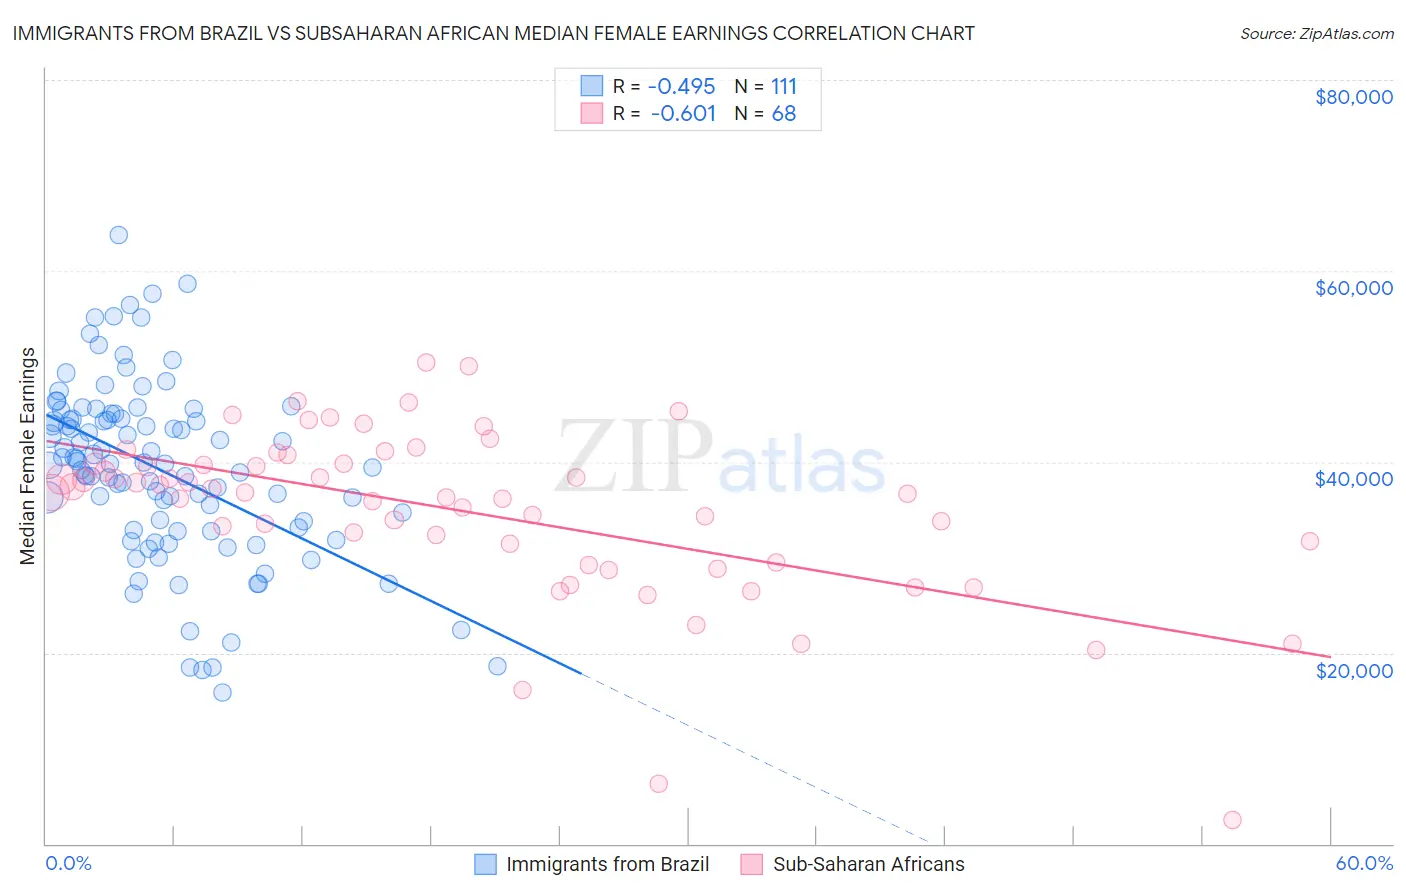 Immigrants from Brazil vs Subsaharan African Median Female Earnings